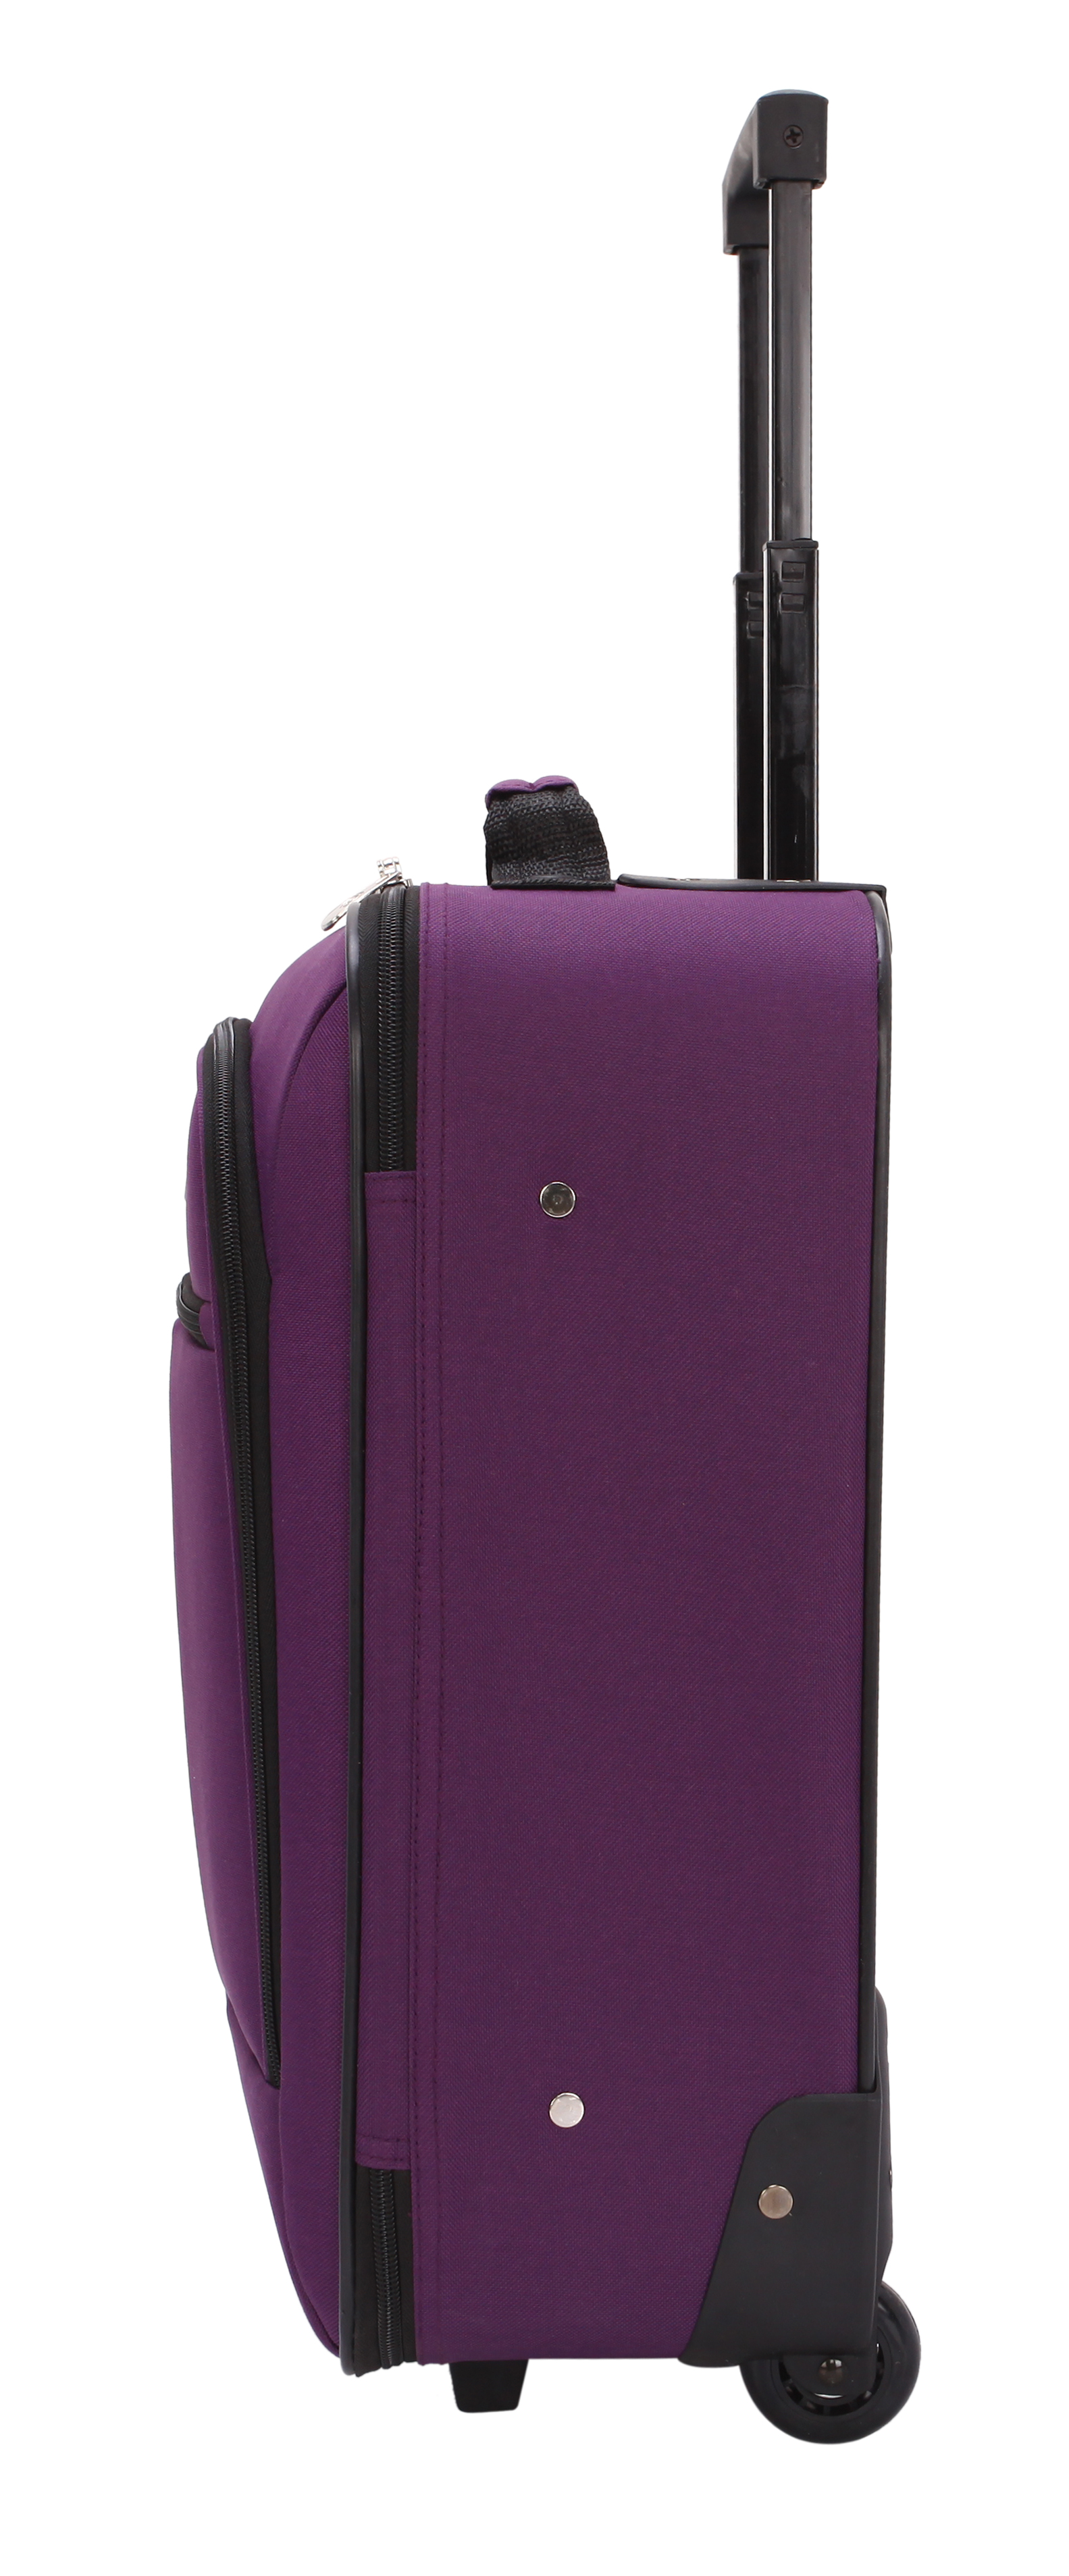 Protege Pilot Case 18" Carry-on Luggage, Purple, 12.5"L x 6.5"D x 19.25"H - image 4 of 7